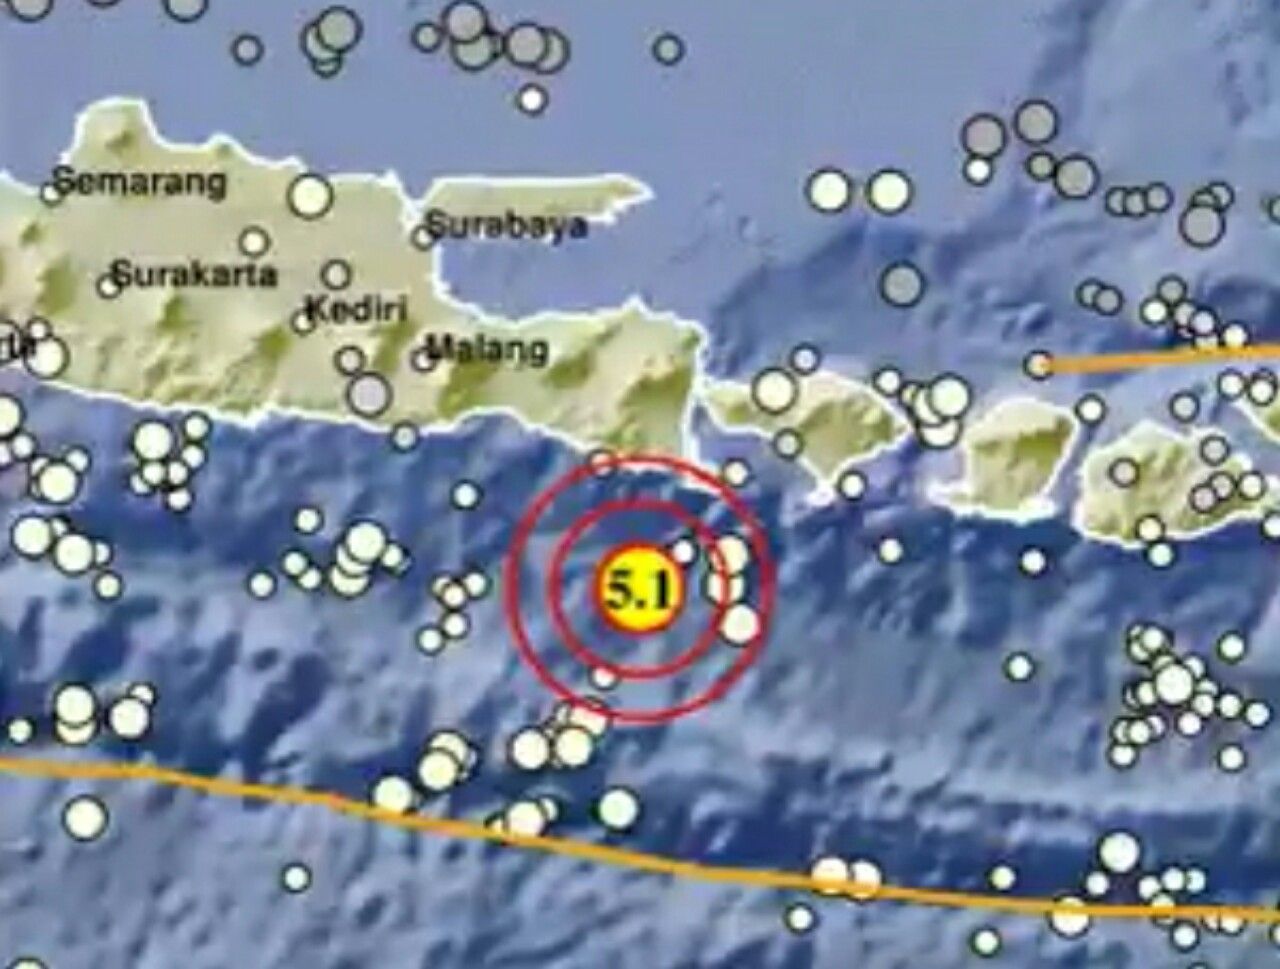 ThomasinaHodell: ¡Oye! 10+ Listas de Gempa Hari Ini Bali? Maybe you